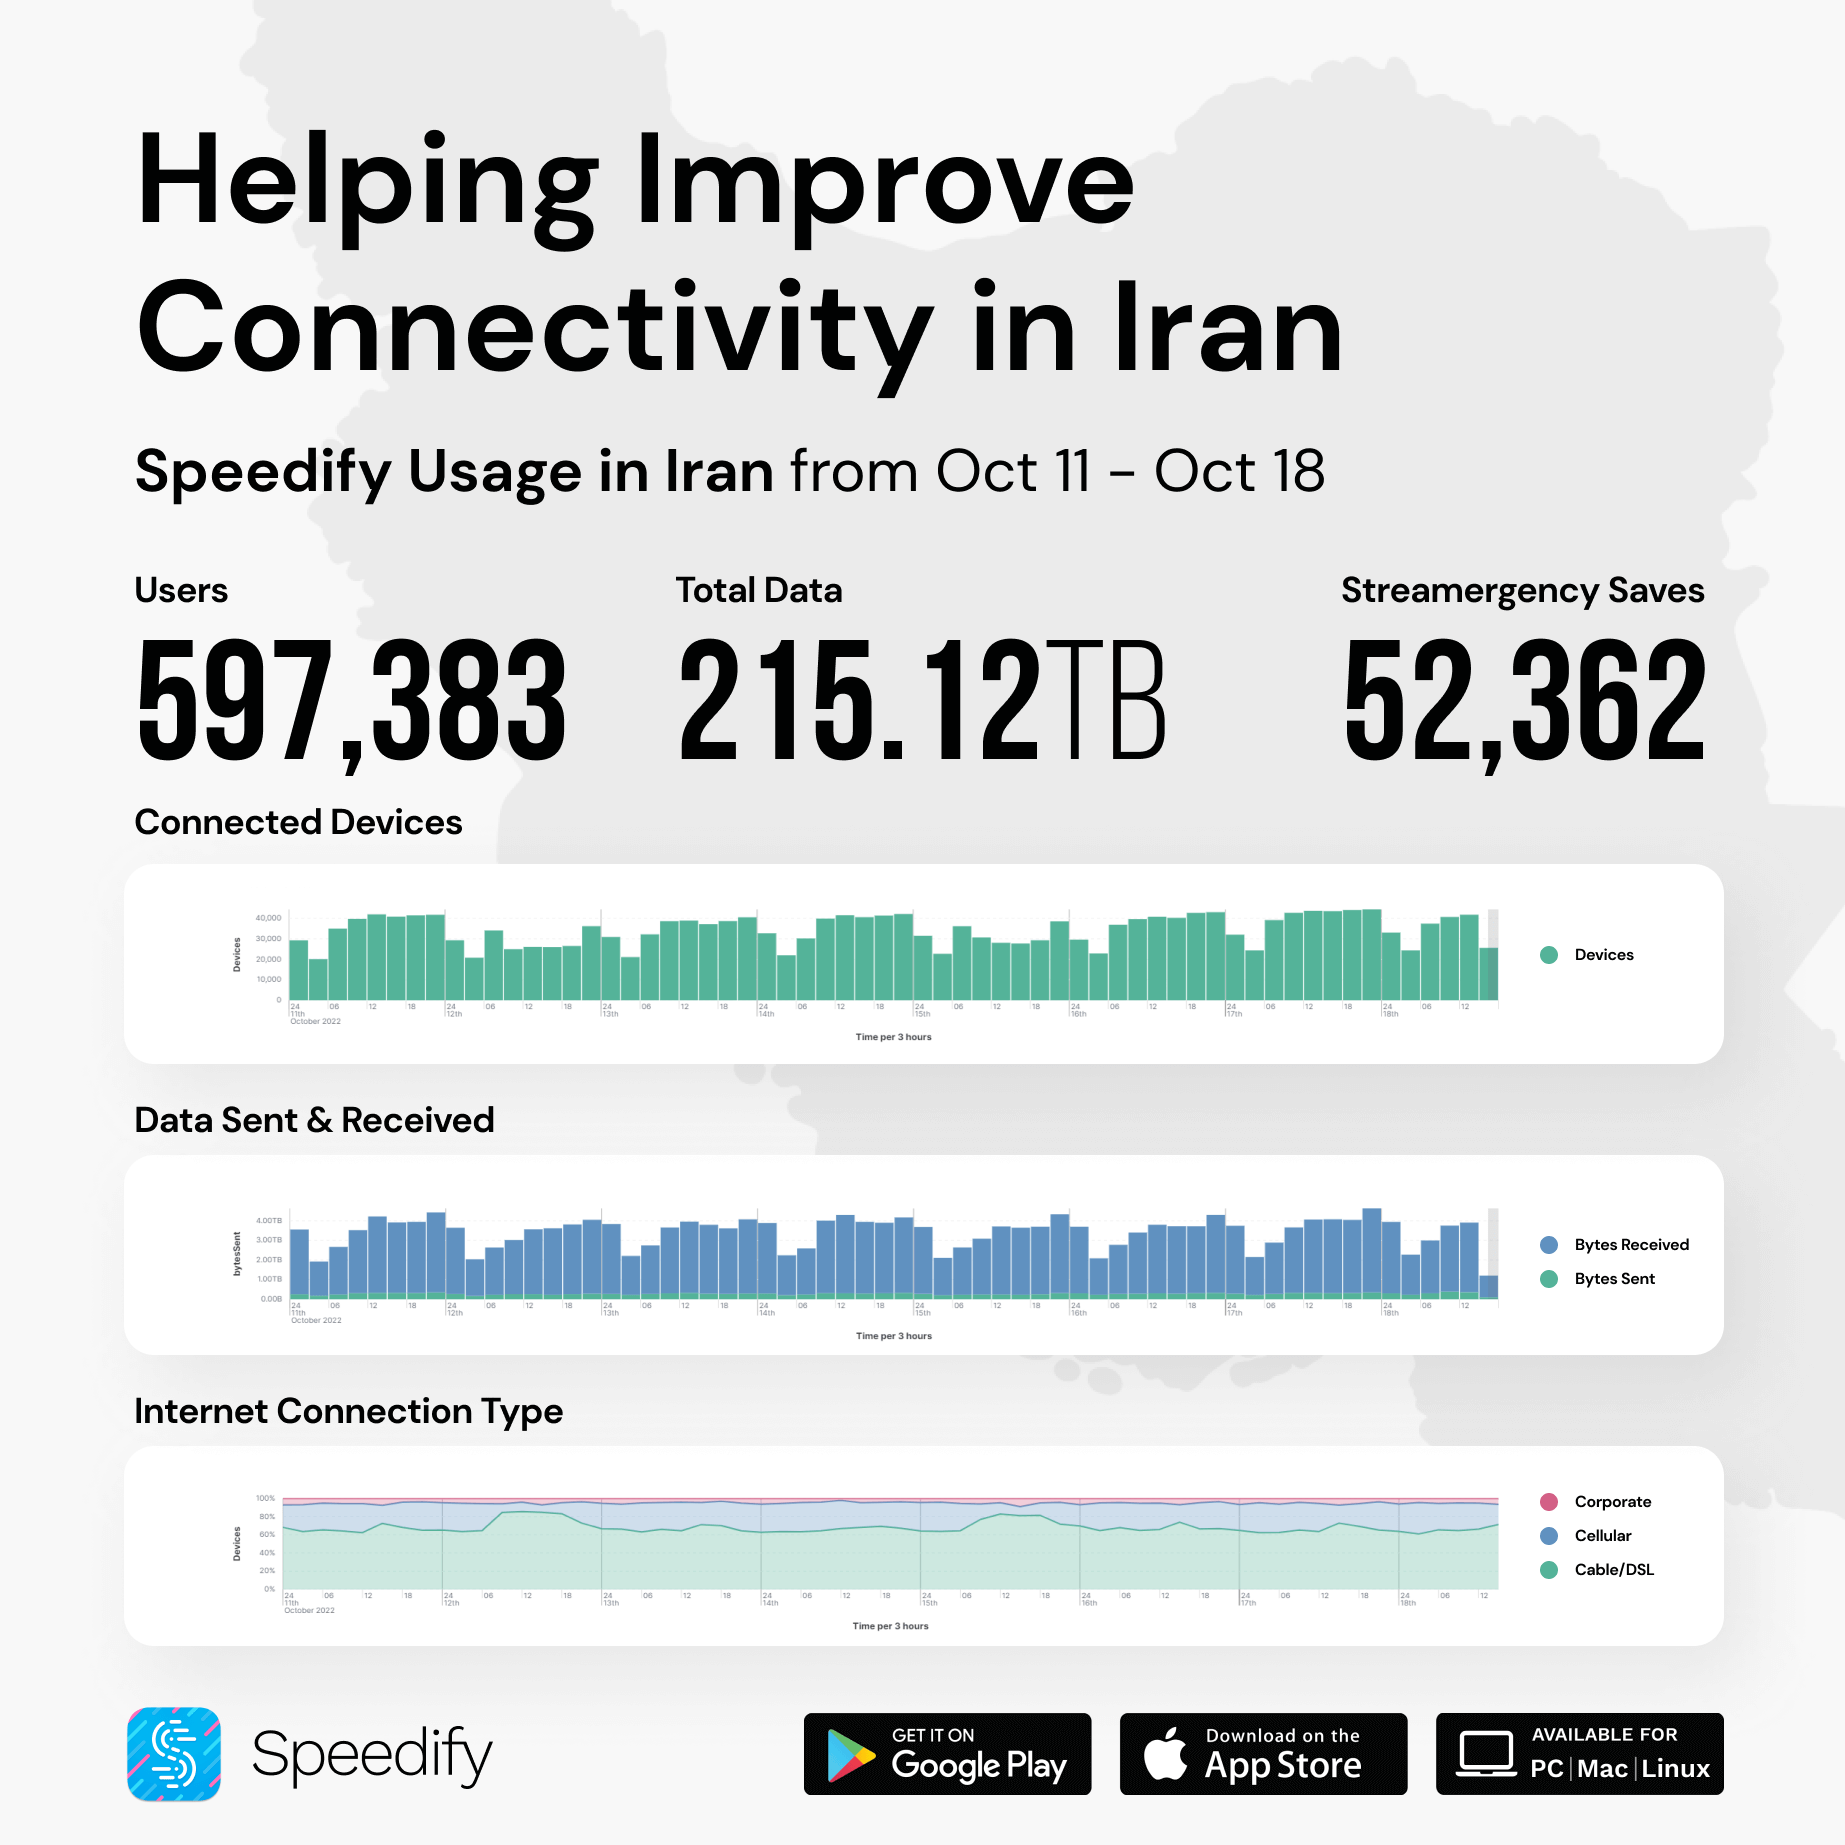 Oct 18 - Iran Internet usage for Speedify users